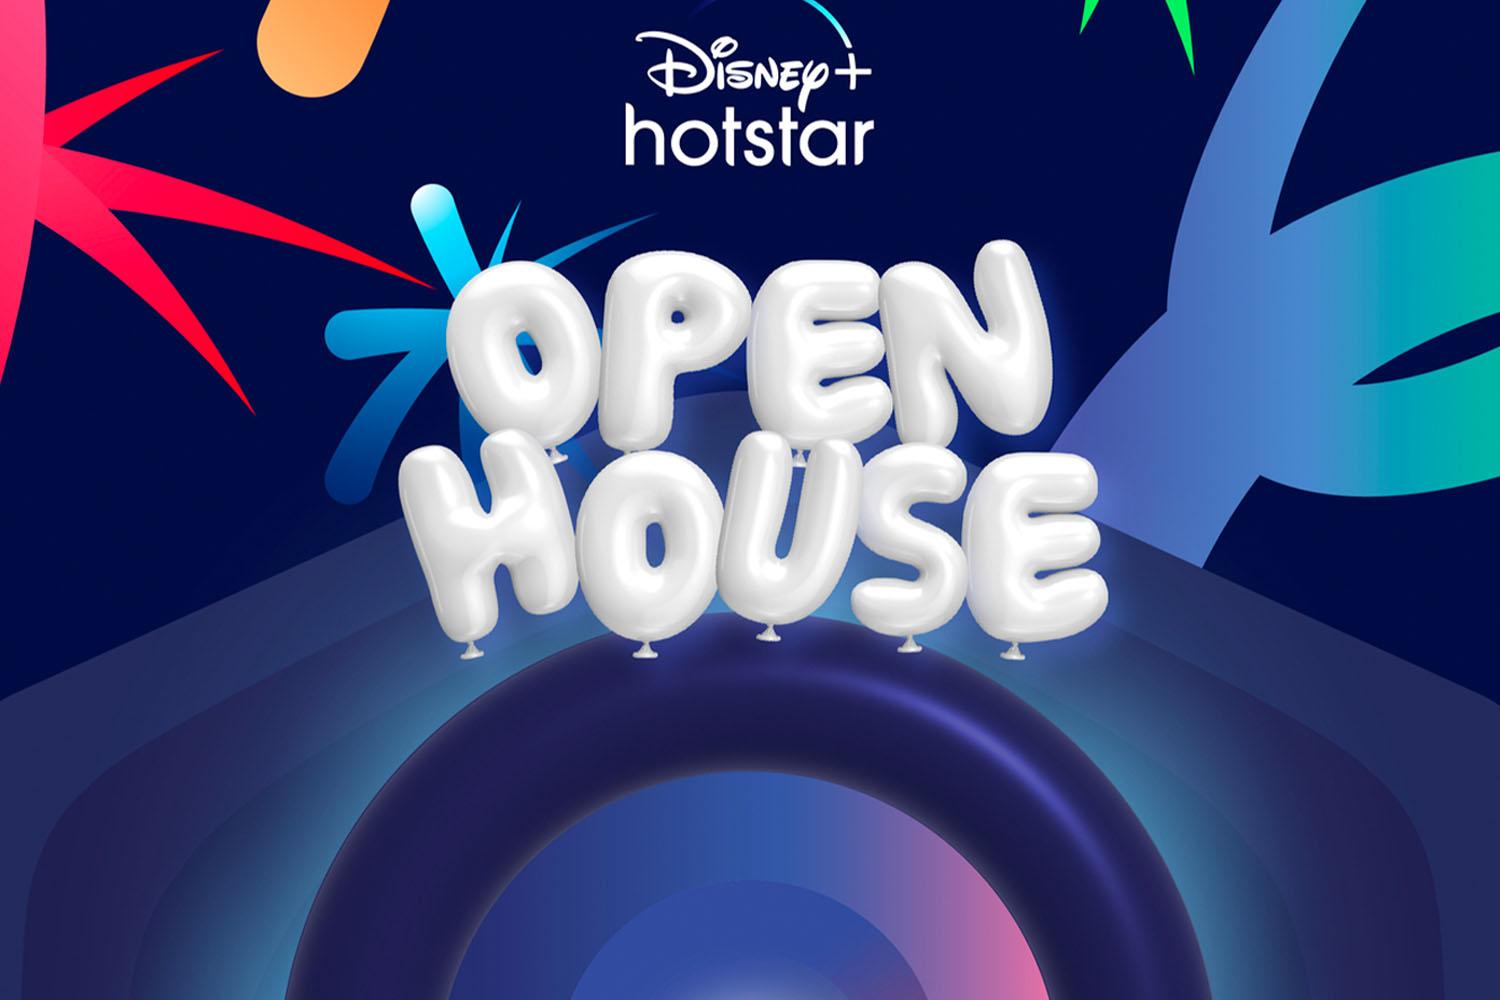 PR-Disney-plus-hotstar-Open-House-SPACEBAR-Hero